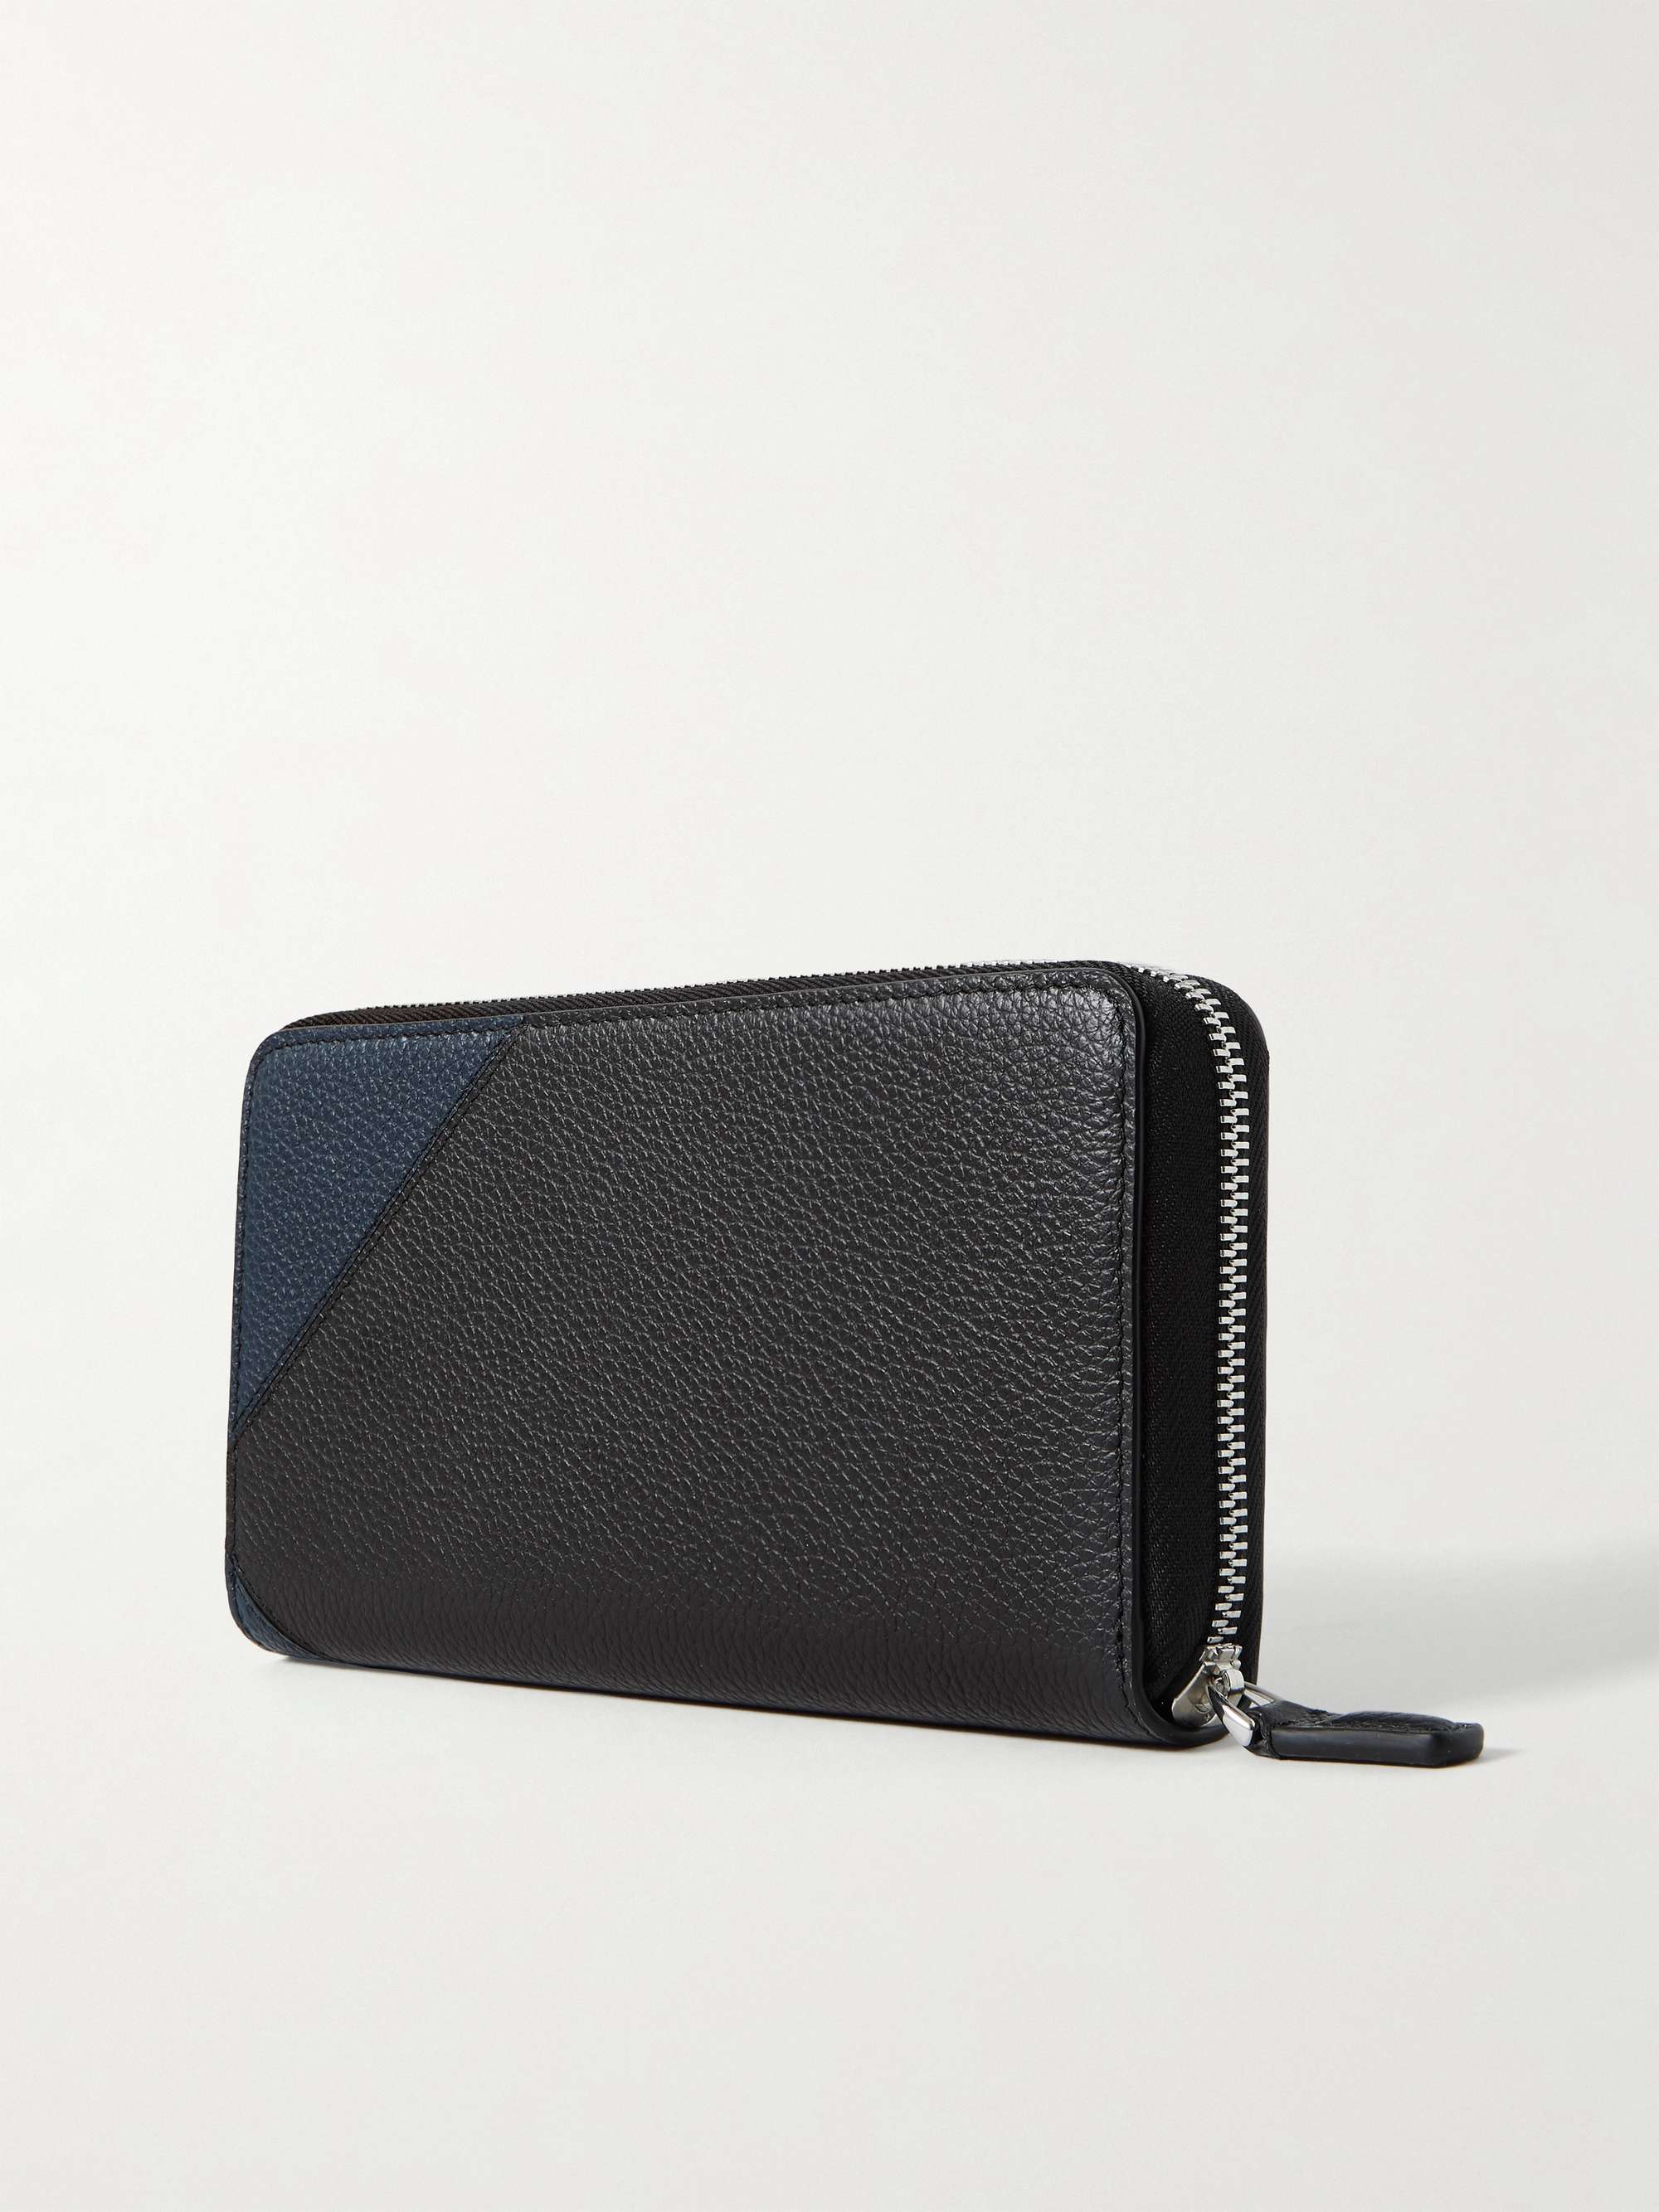 MONTBLANC Meisterstück Two-Tone Full-Grain Leather Zip-Around Wallet